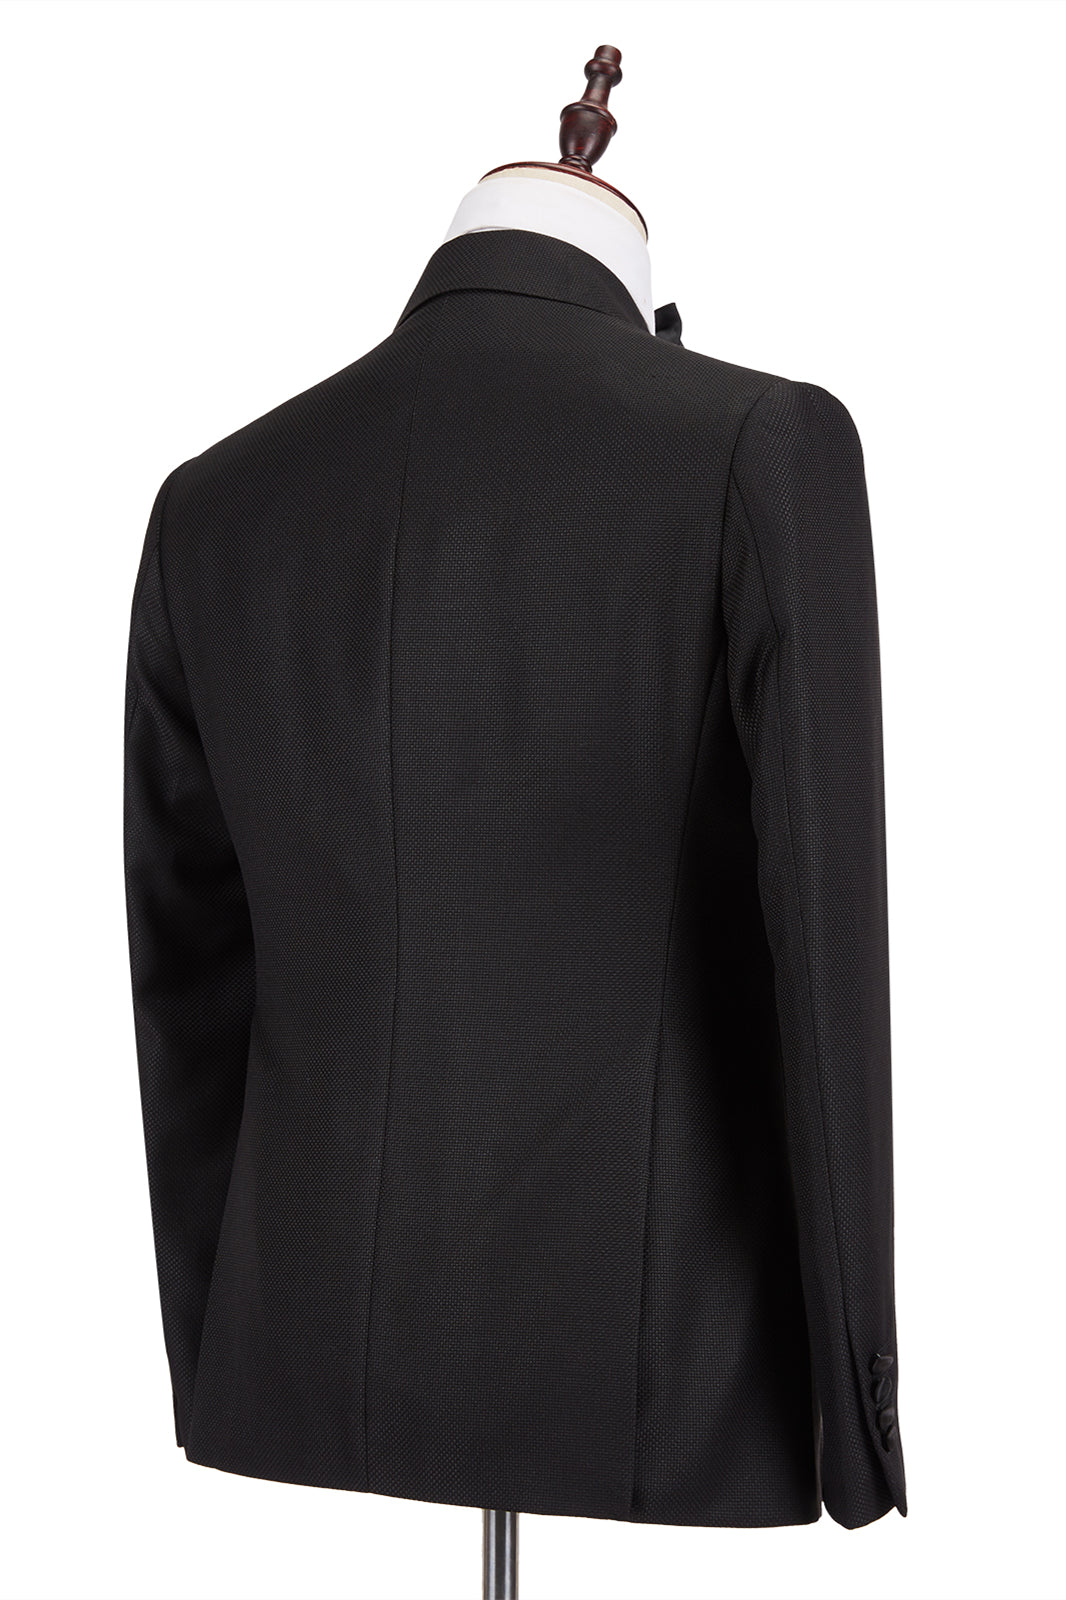 Black Men's Wedding Suit Groom Tuxedos - Classic Satin Peak Lapel Double Breasted-Wedding Suits-BallBride